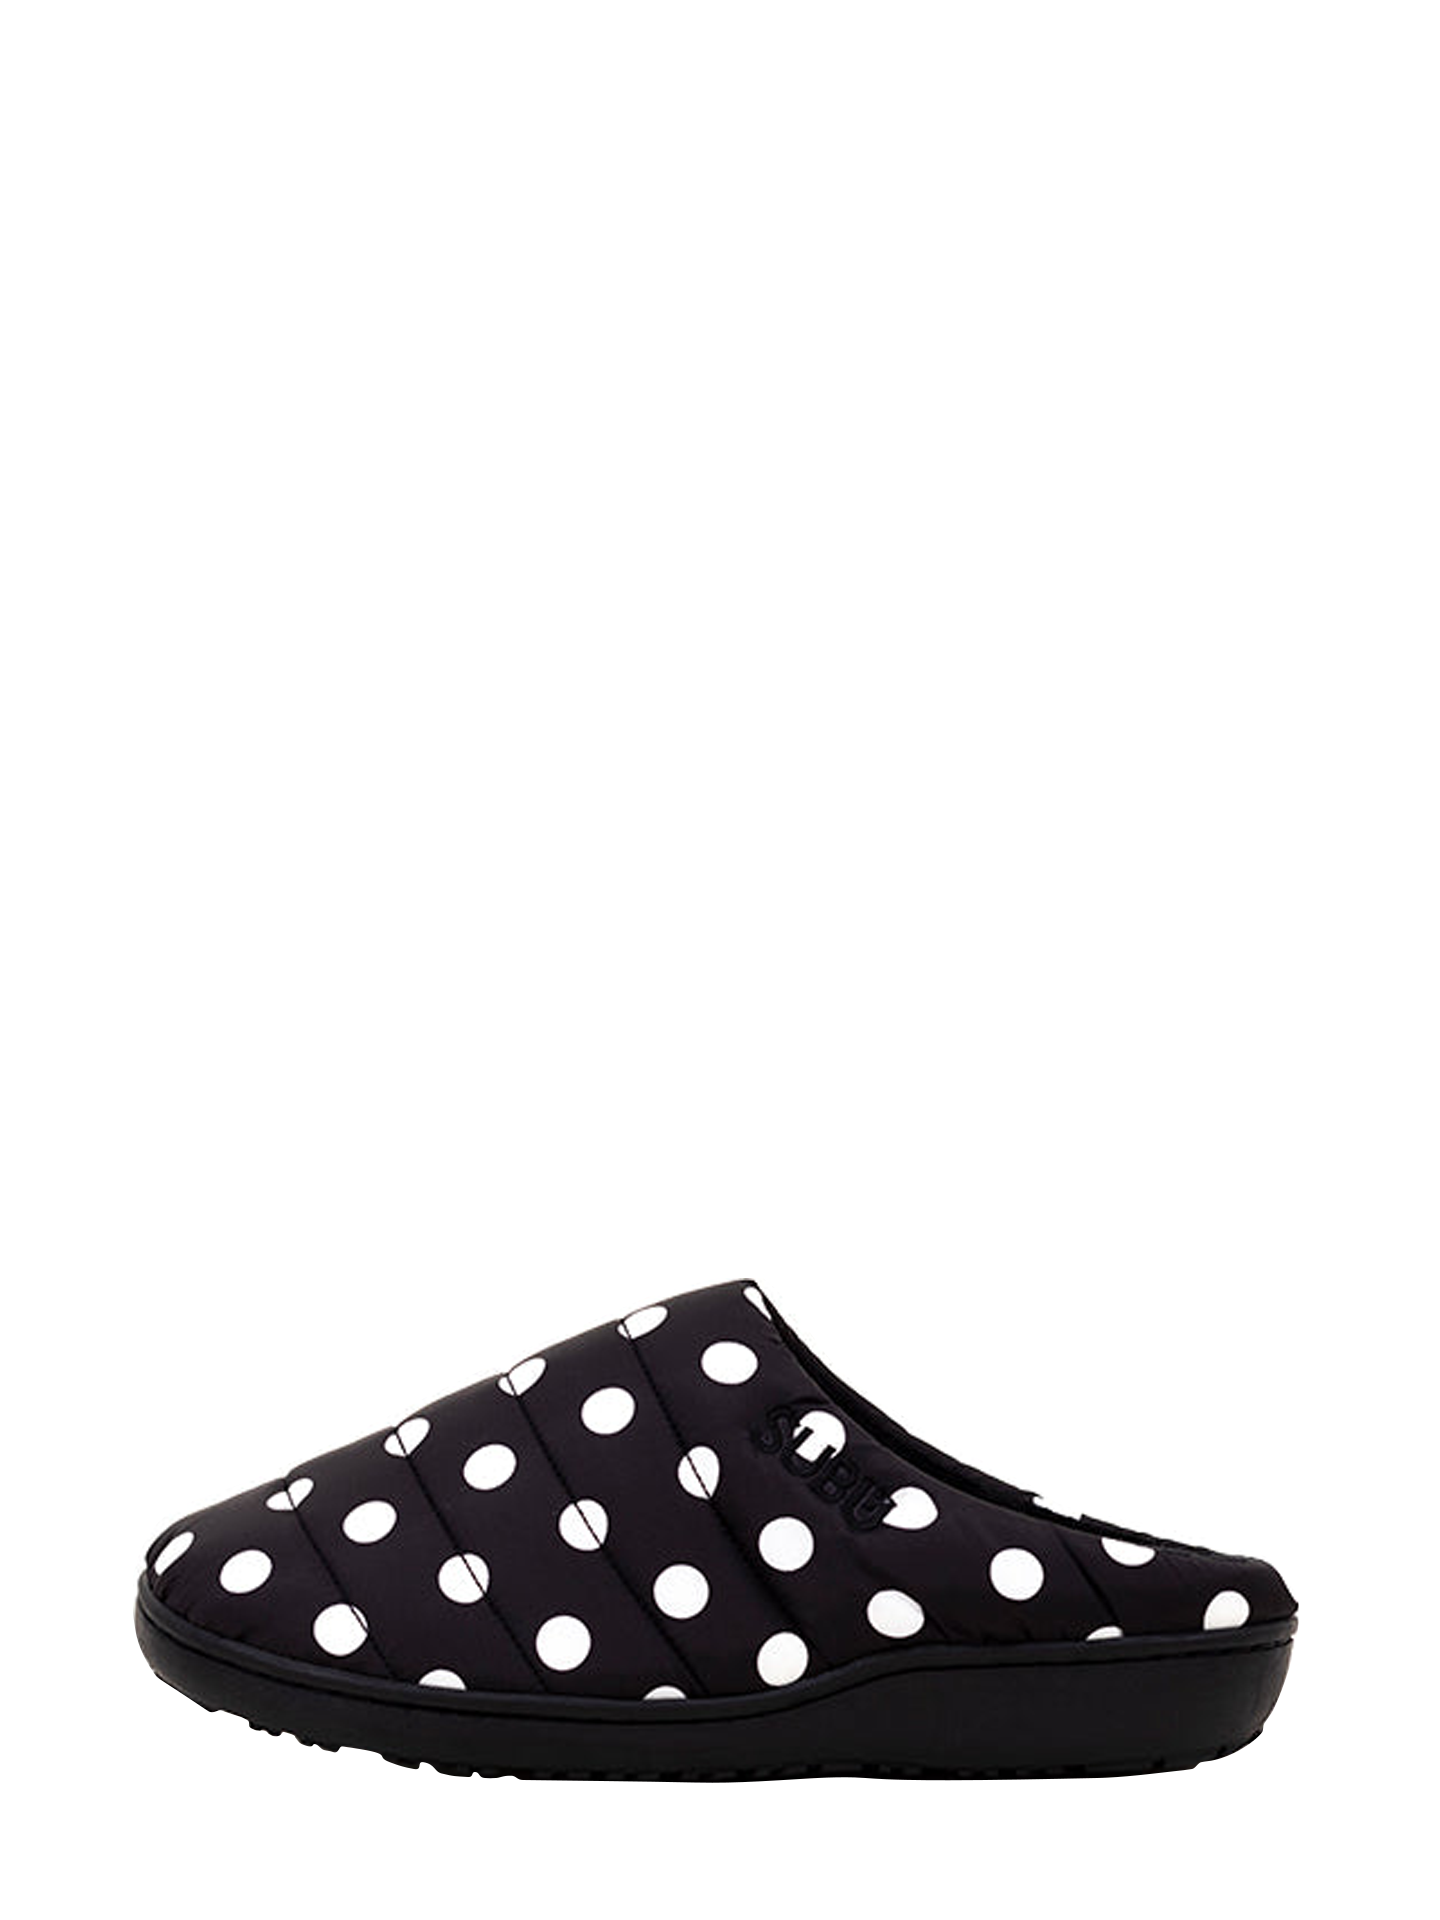 Subu puffer slippers, classic dots